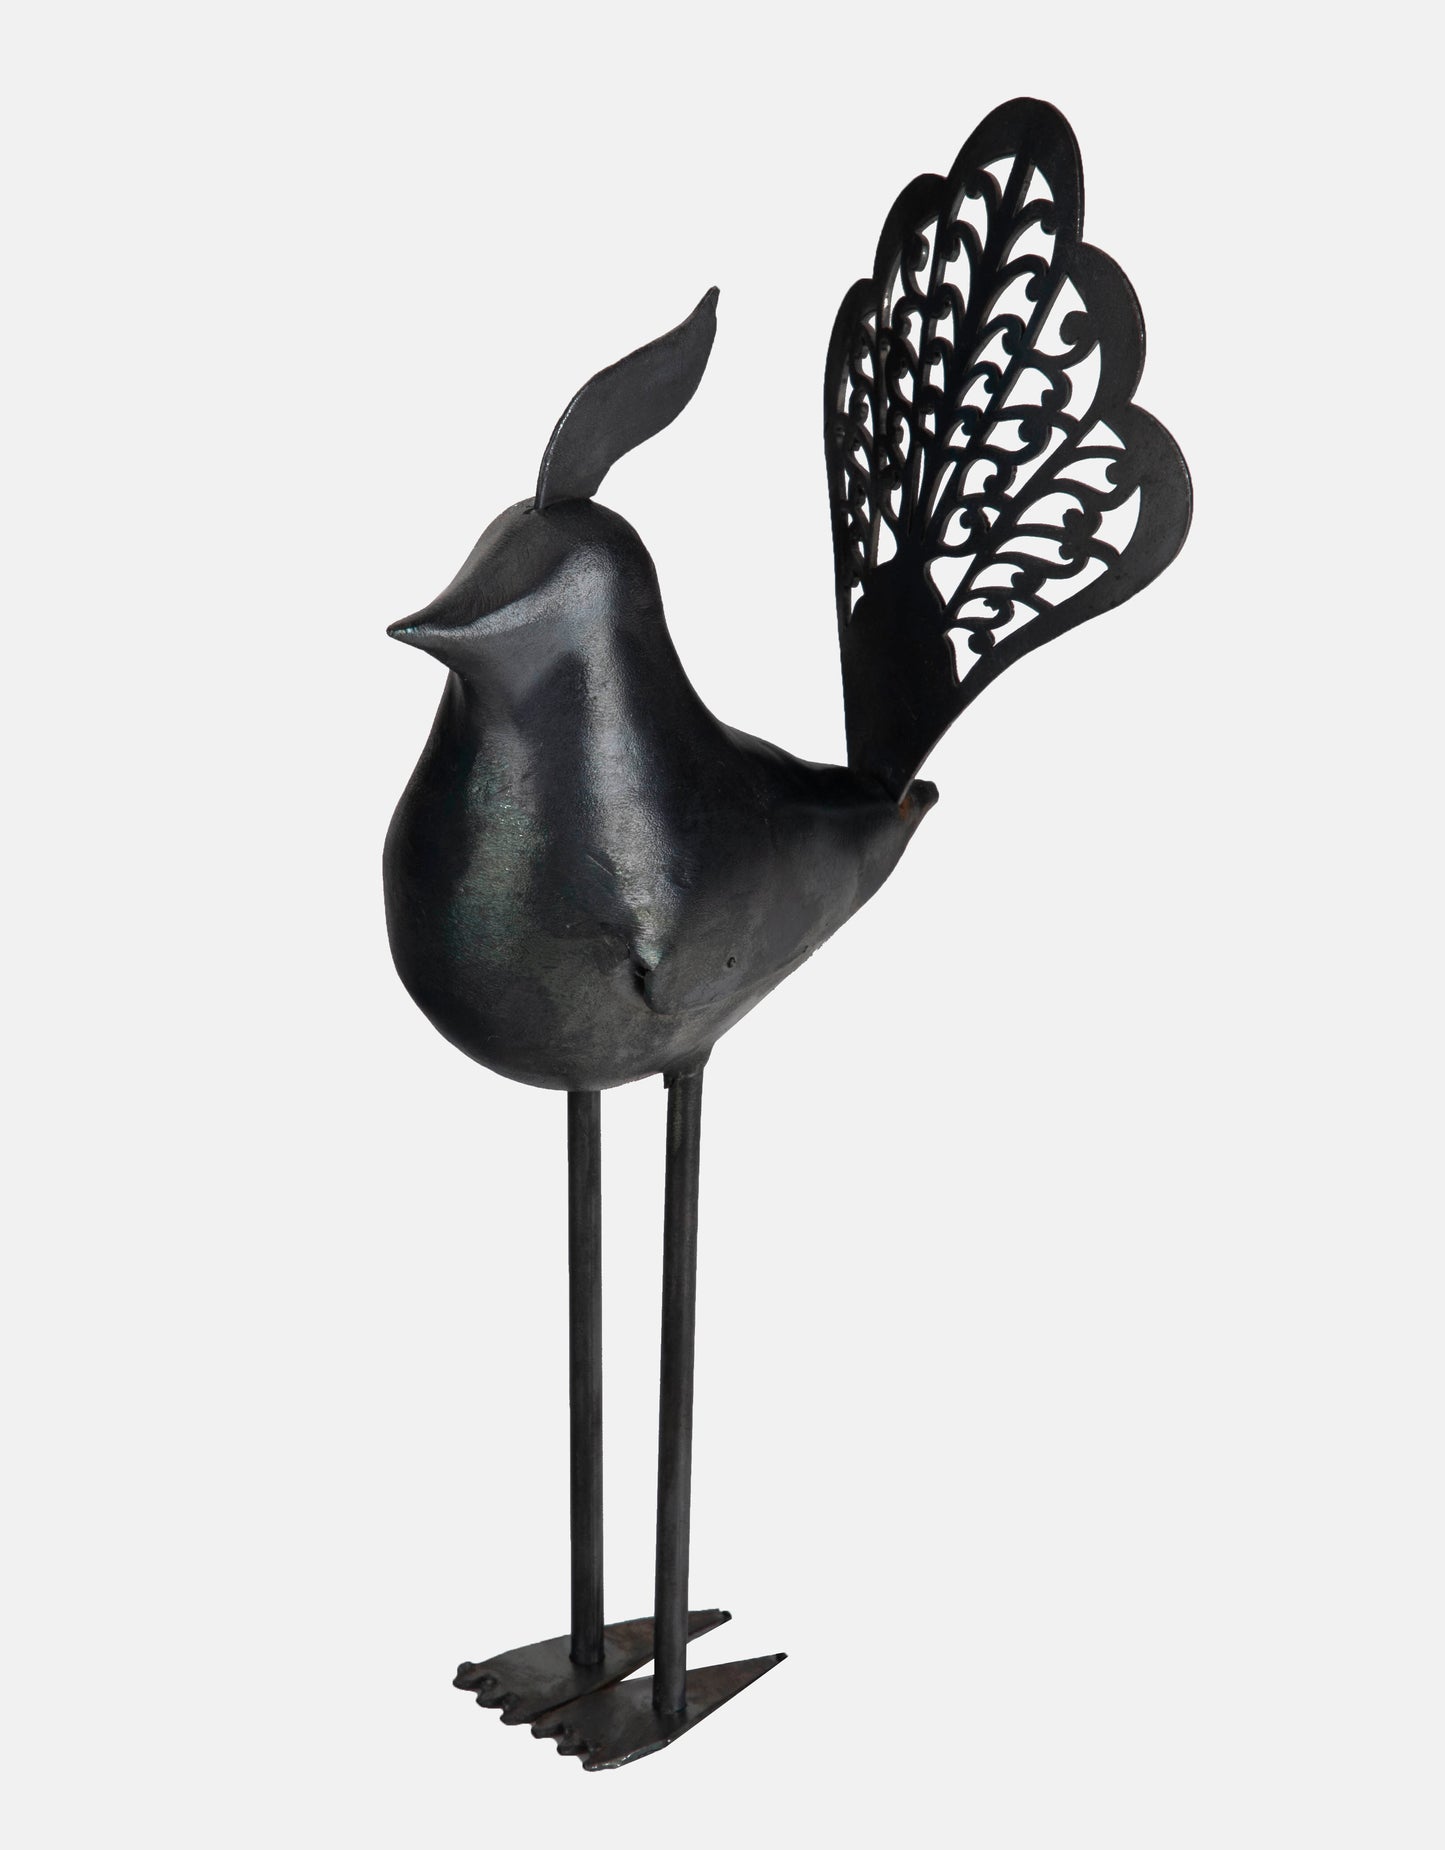 Tall Metal Bird with High Tail